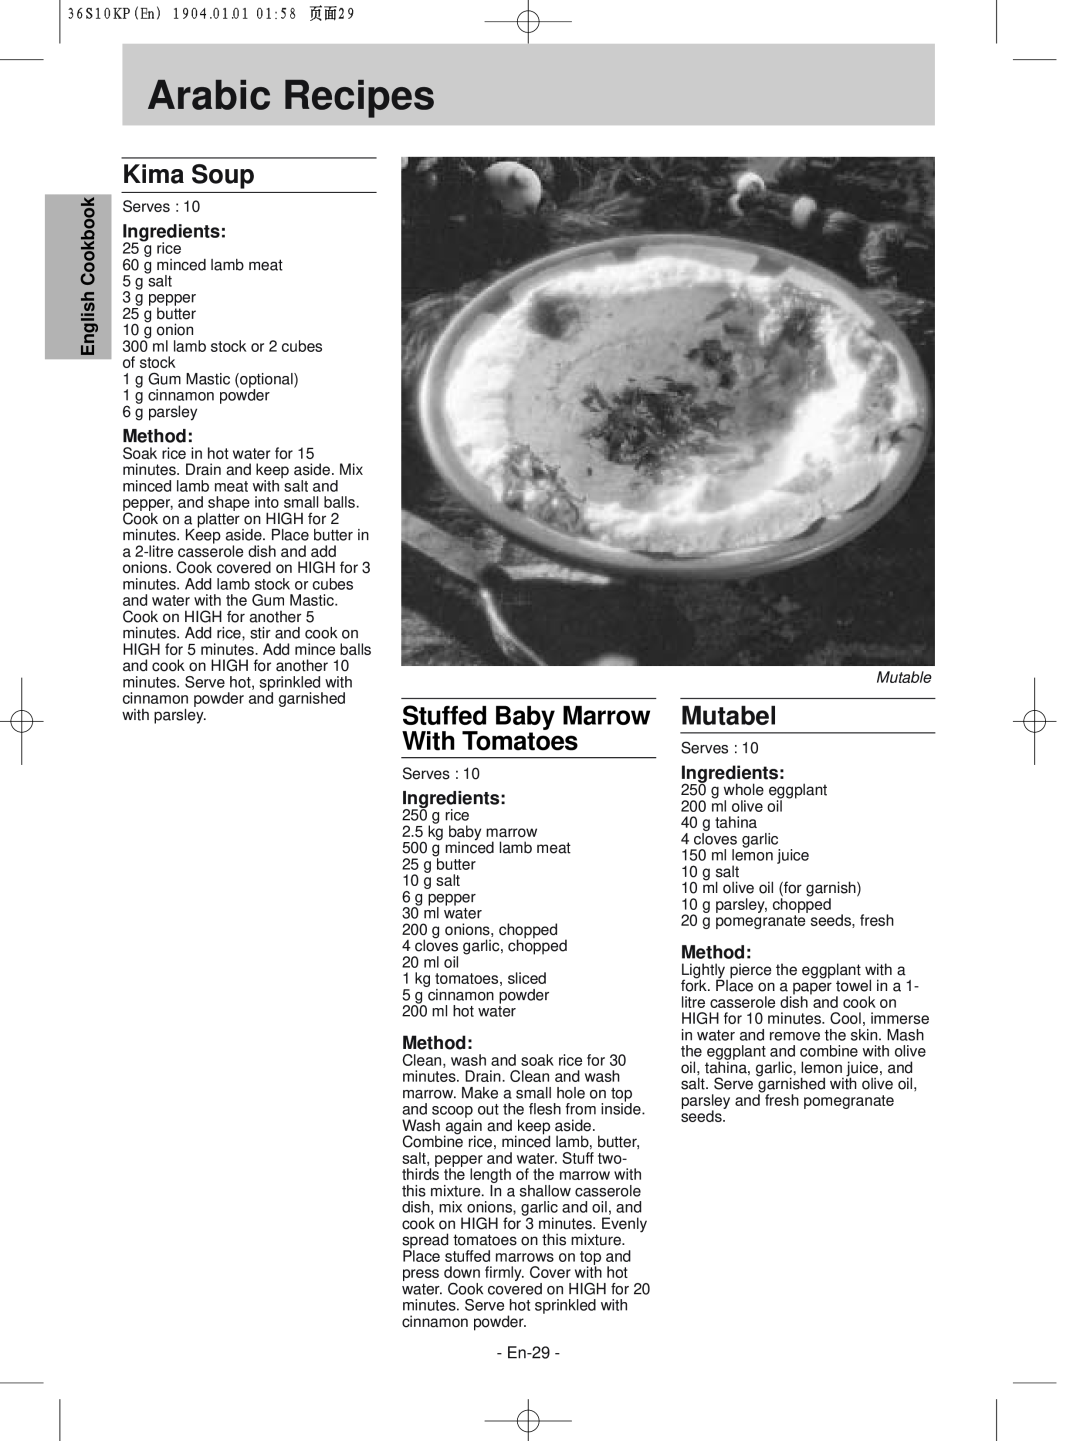 Panasonic NN-S235WF, NN-S215WF Arabic Recipes, Kima Soup, Mutabel, Stuffed Baby Marrow With Tomatoes, English Cookbook 